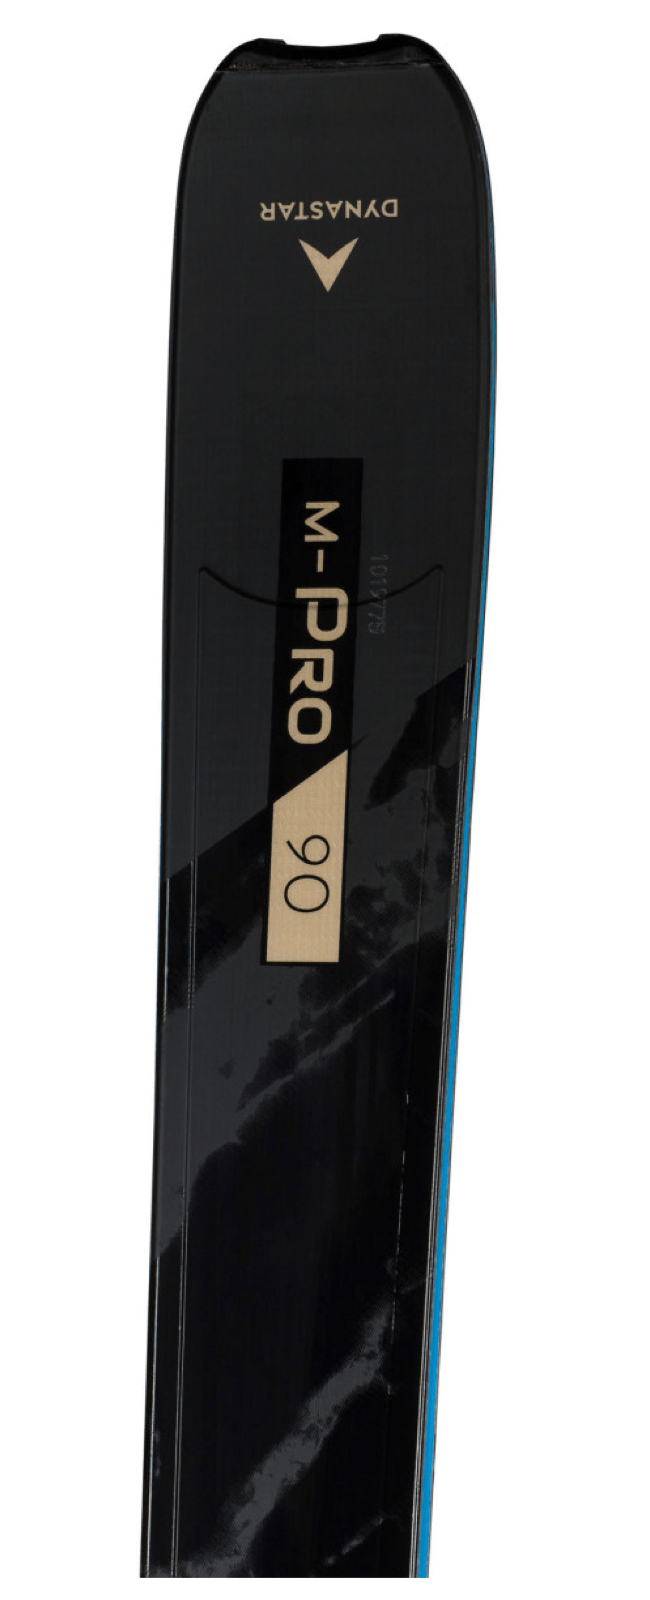 Dynastar M-Pro 90 Open Skis · 2023 · 162 cm